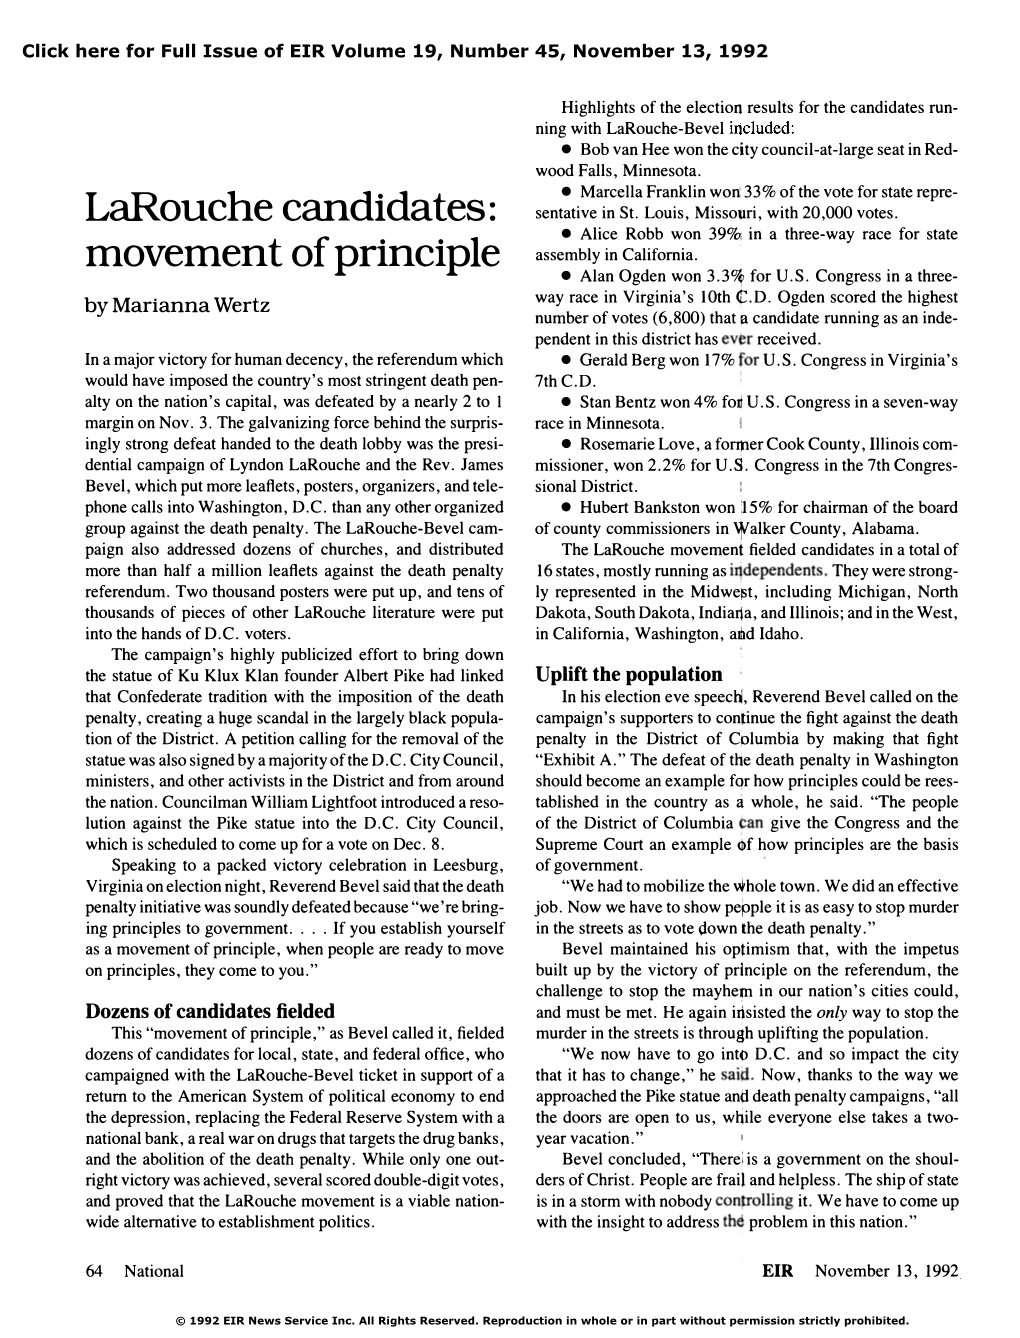 Larouche Candidates: Movement of Principle